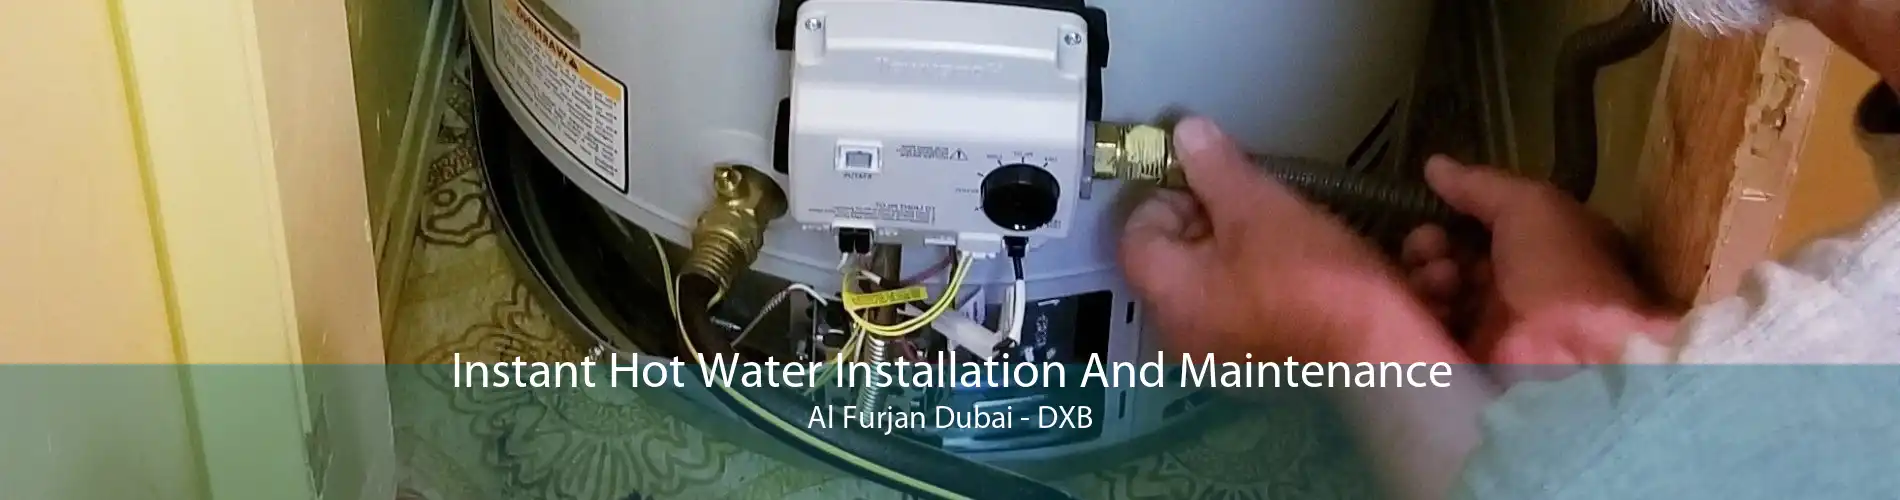 Instant Hot Water Installation And Maintenance Al Furjan Dubai - DXB